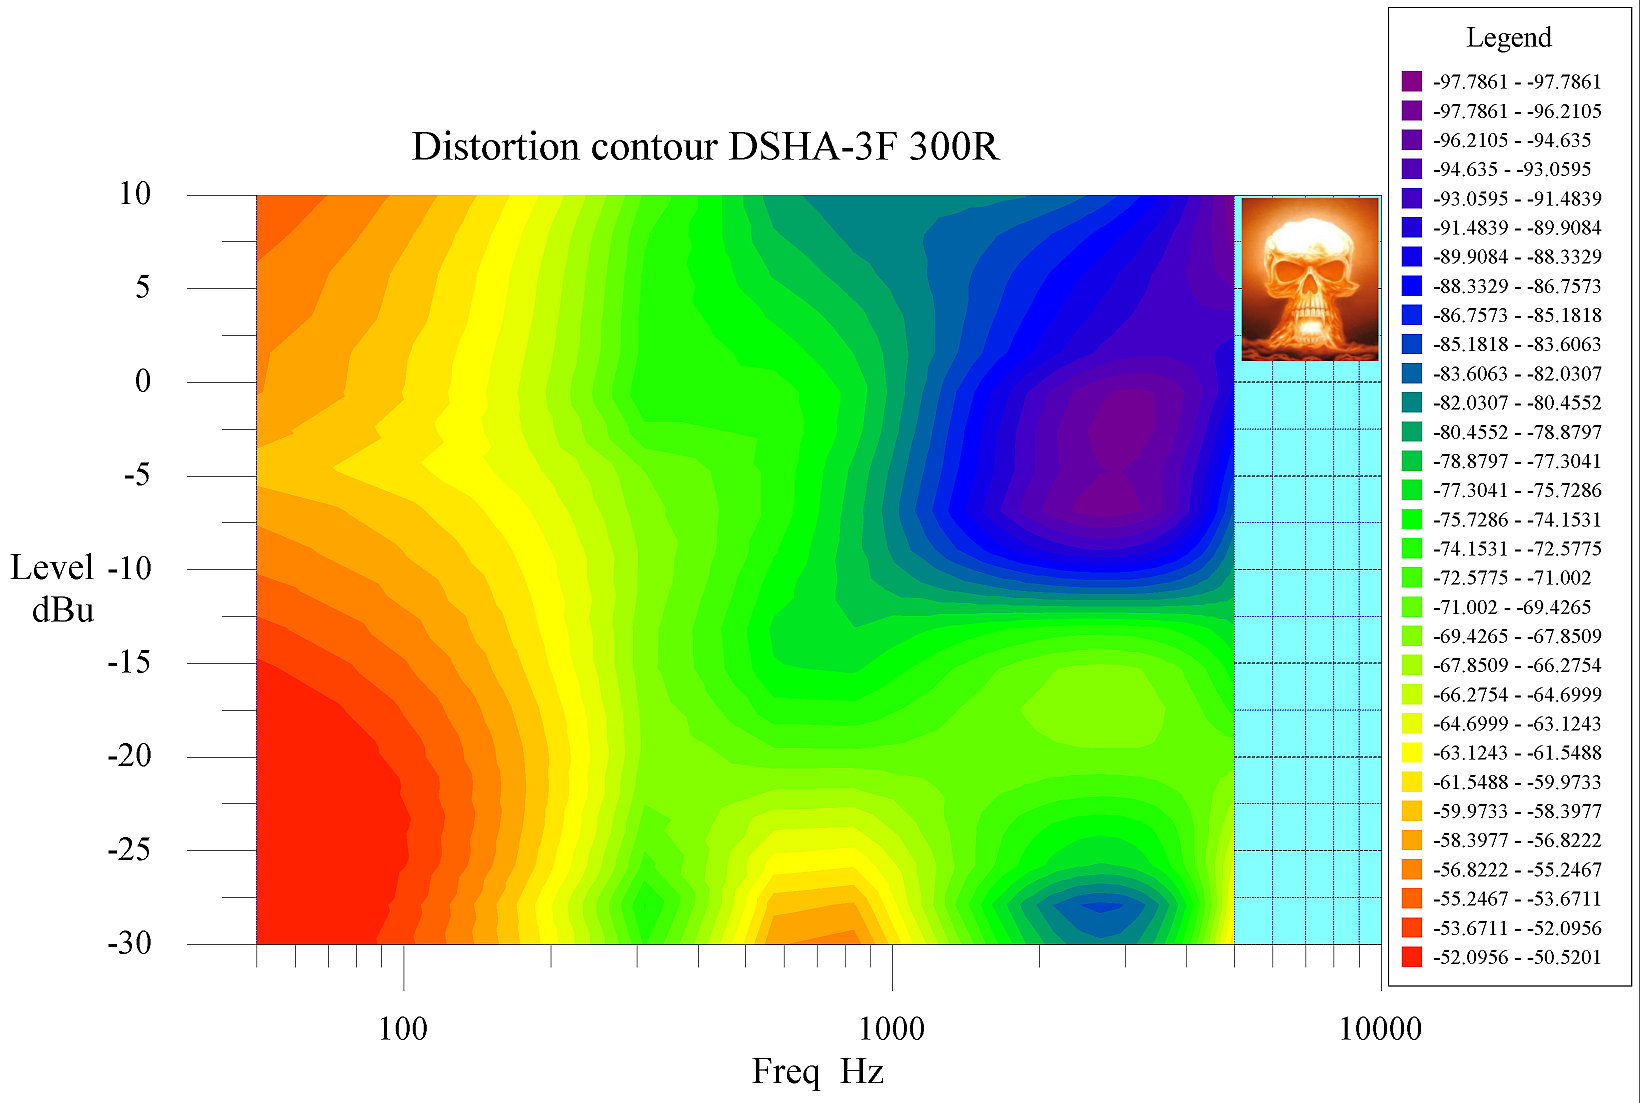 Distortion surface + contour DSHA-3F 300R wm small.png